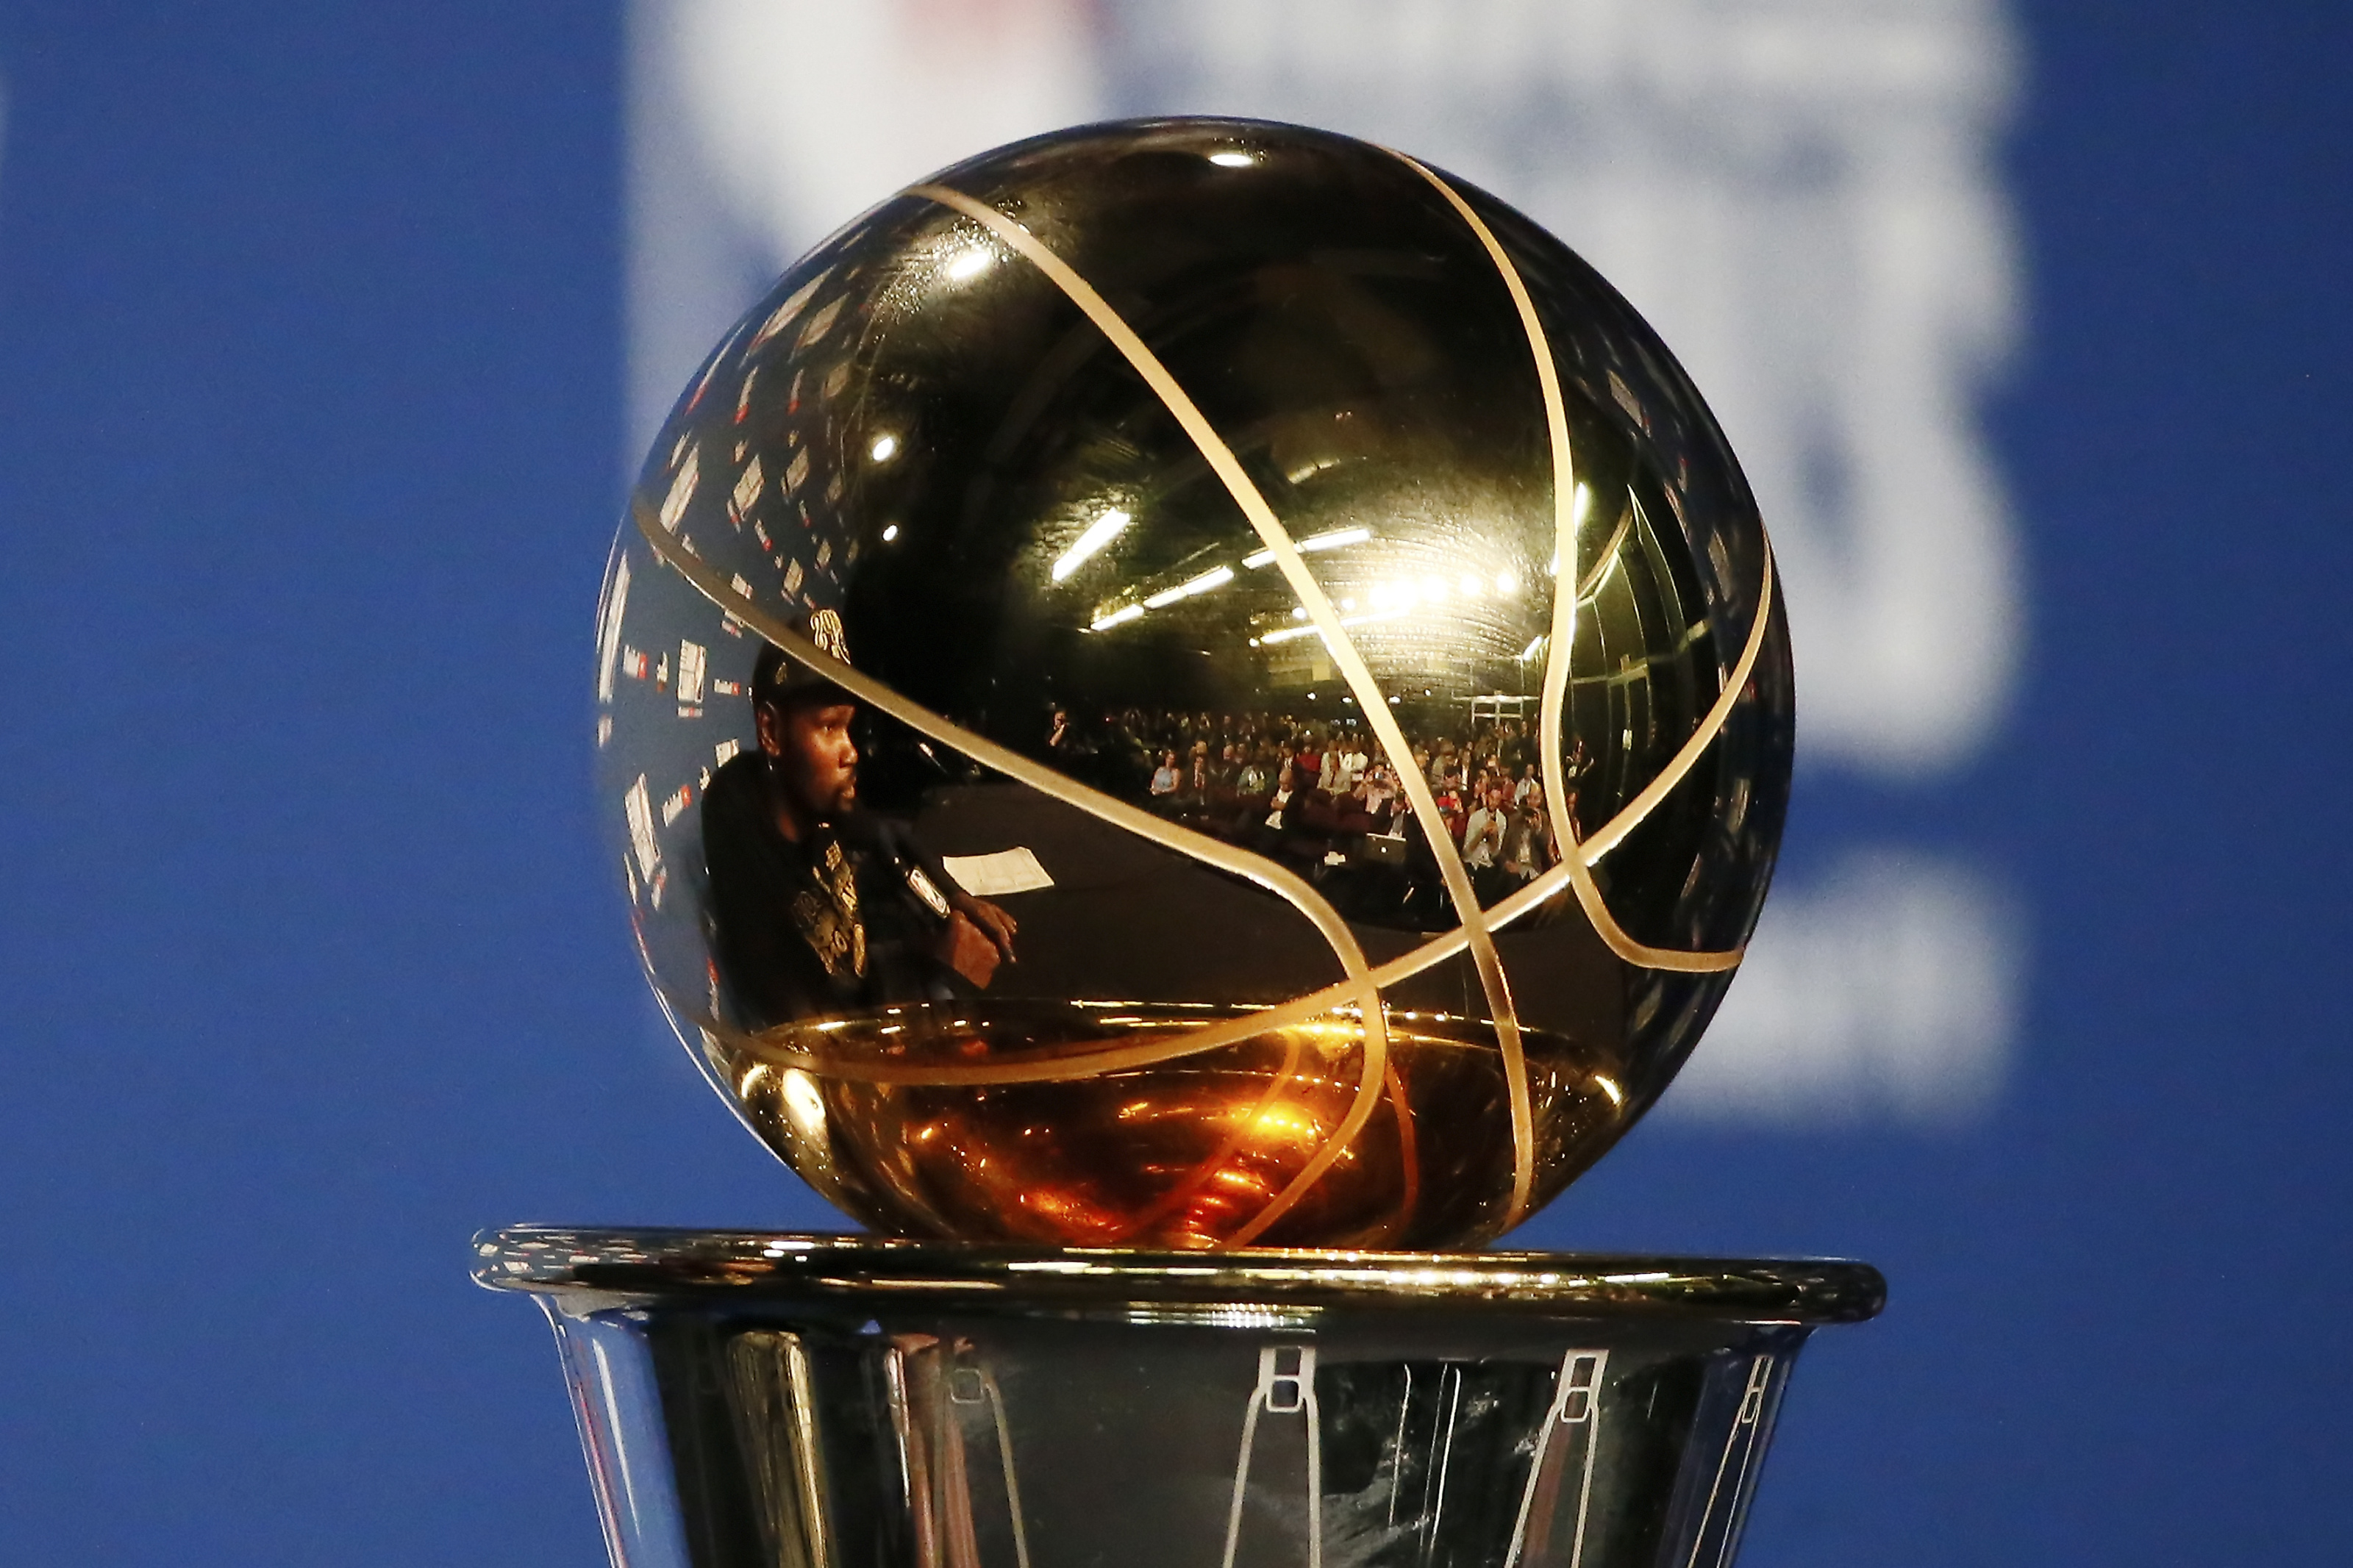 NBA Playoffs: How will it look under Sweet Sixteen system?